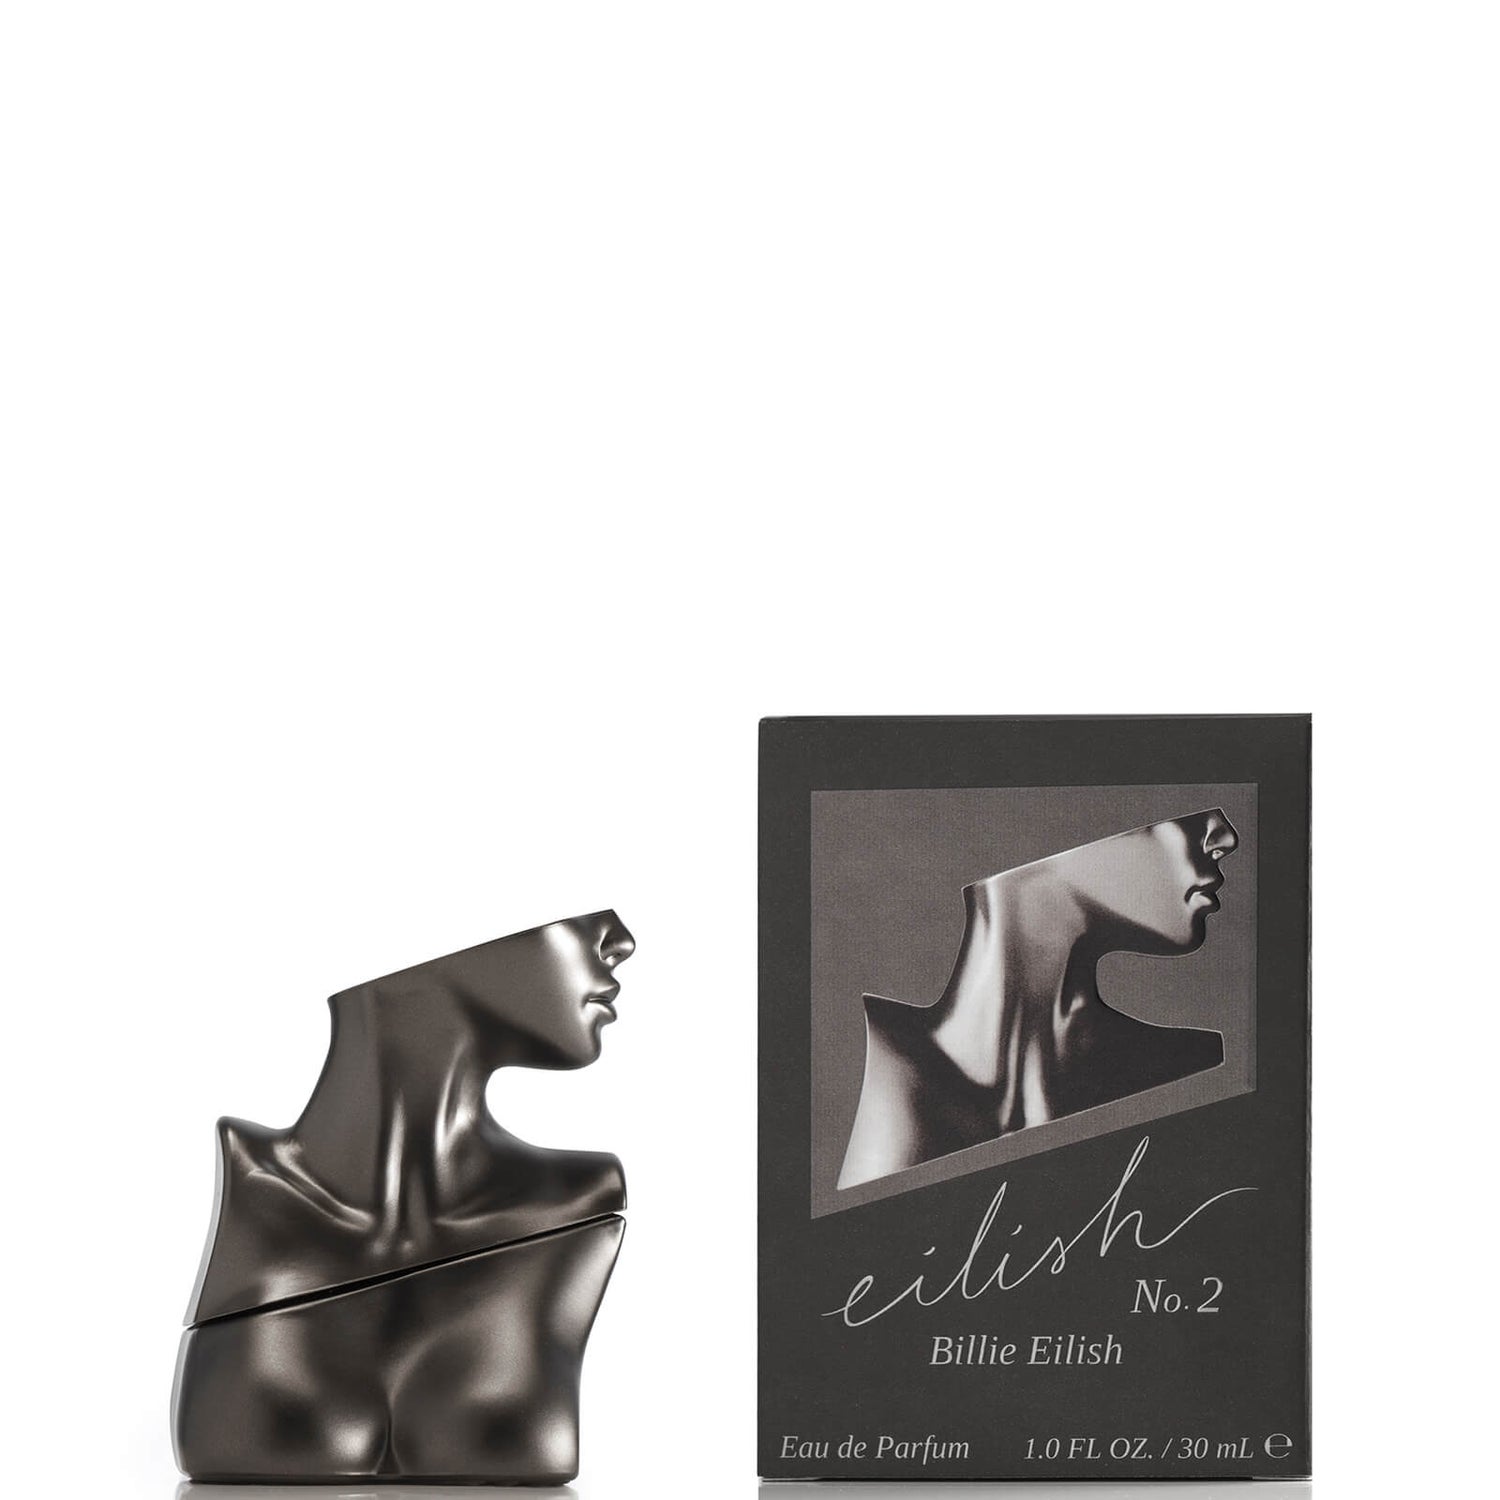 Eilish by Billie Eilish No. 2 Eau de Parfum 30ml